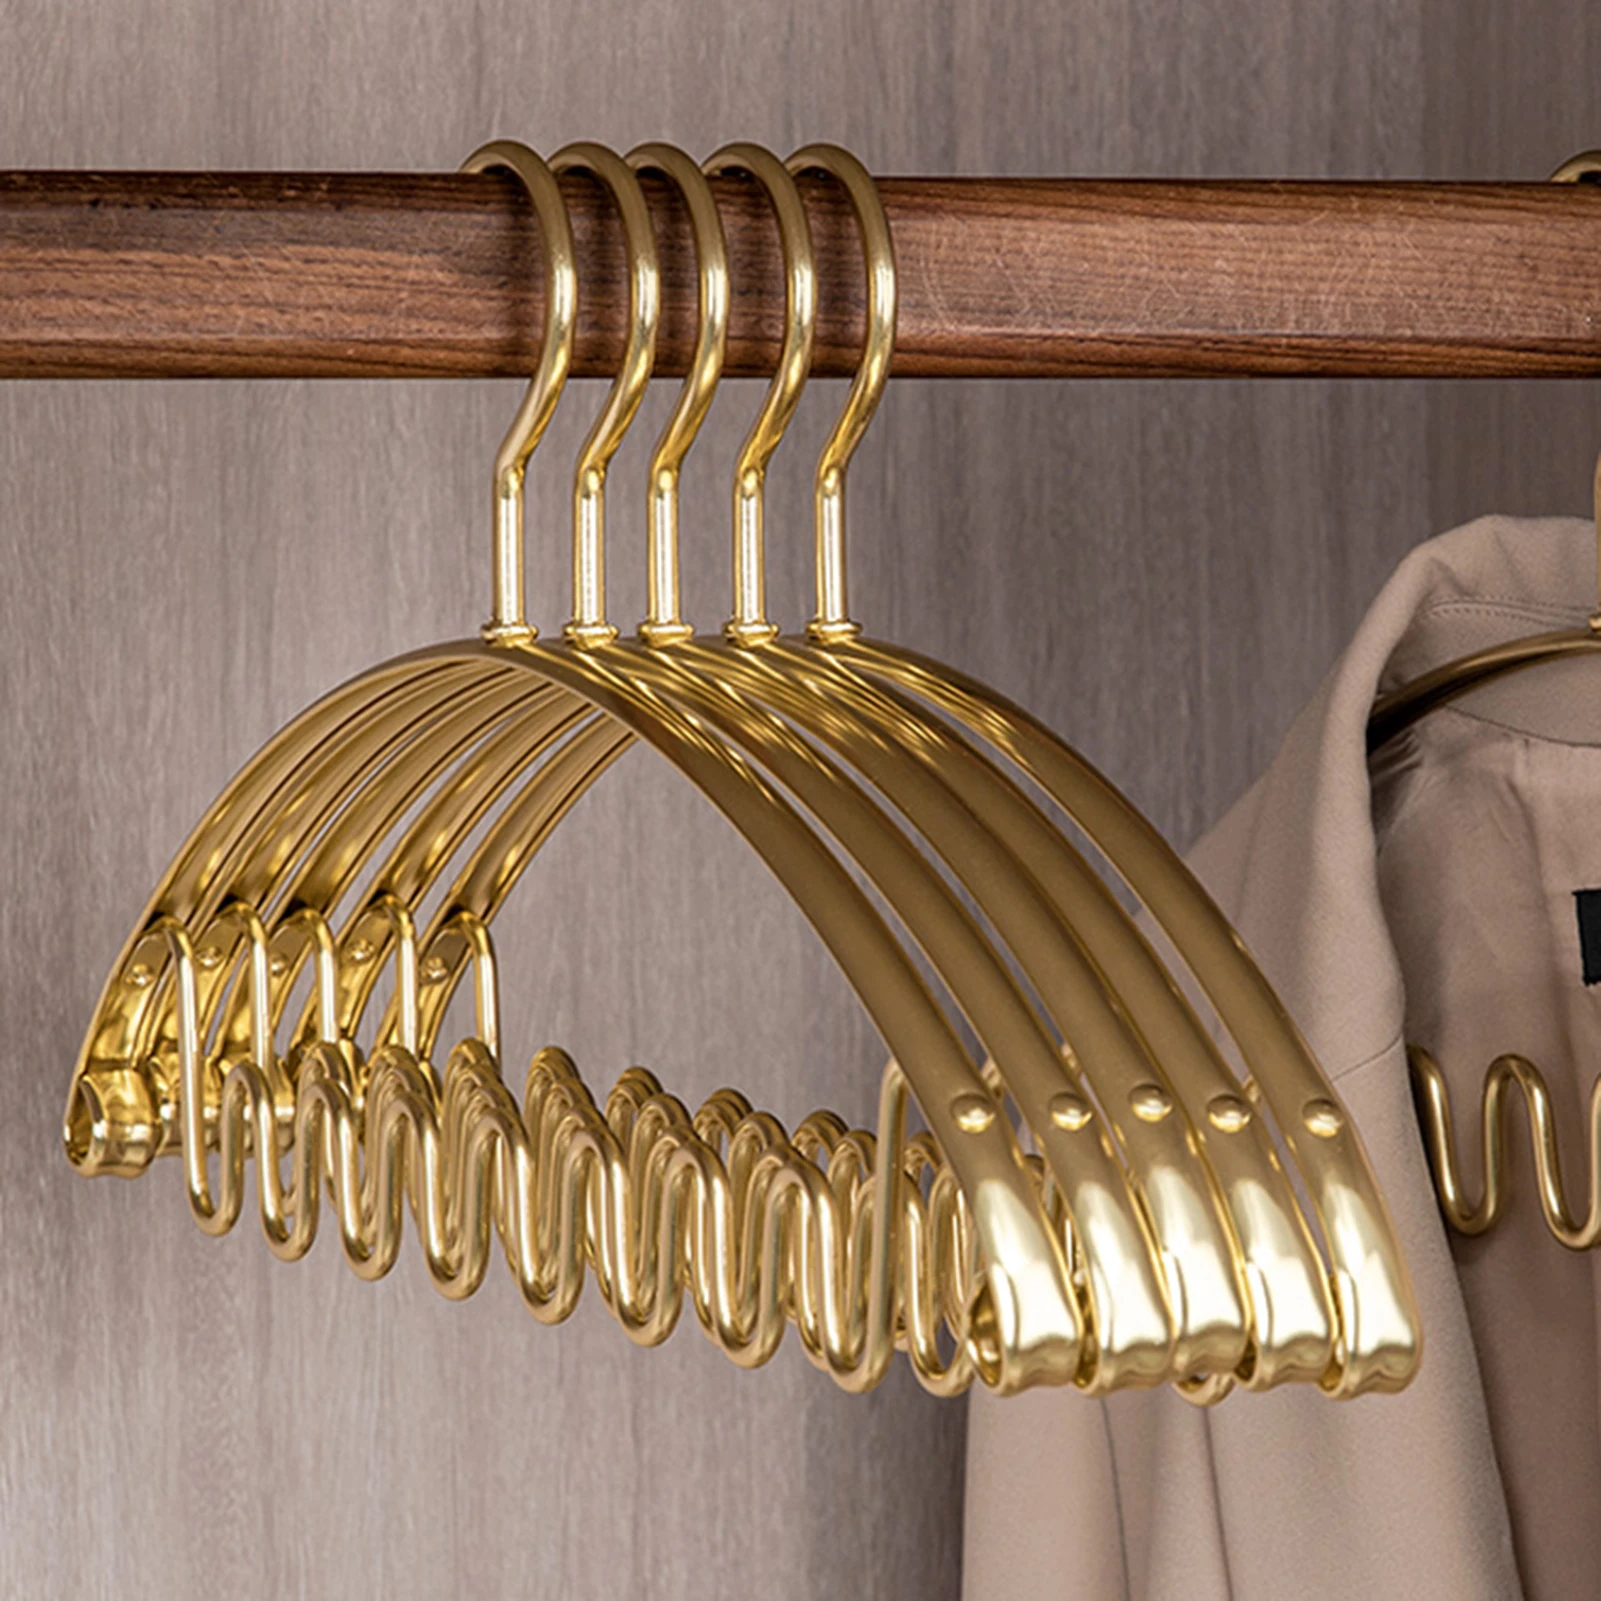 

5pcs Metal Clothes Hanger Aluminum Alloy Wave Shaped Clothes Hangers for Hanging Halter Tops Vests Scarves Storage Oragnizer